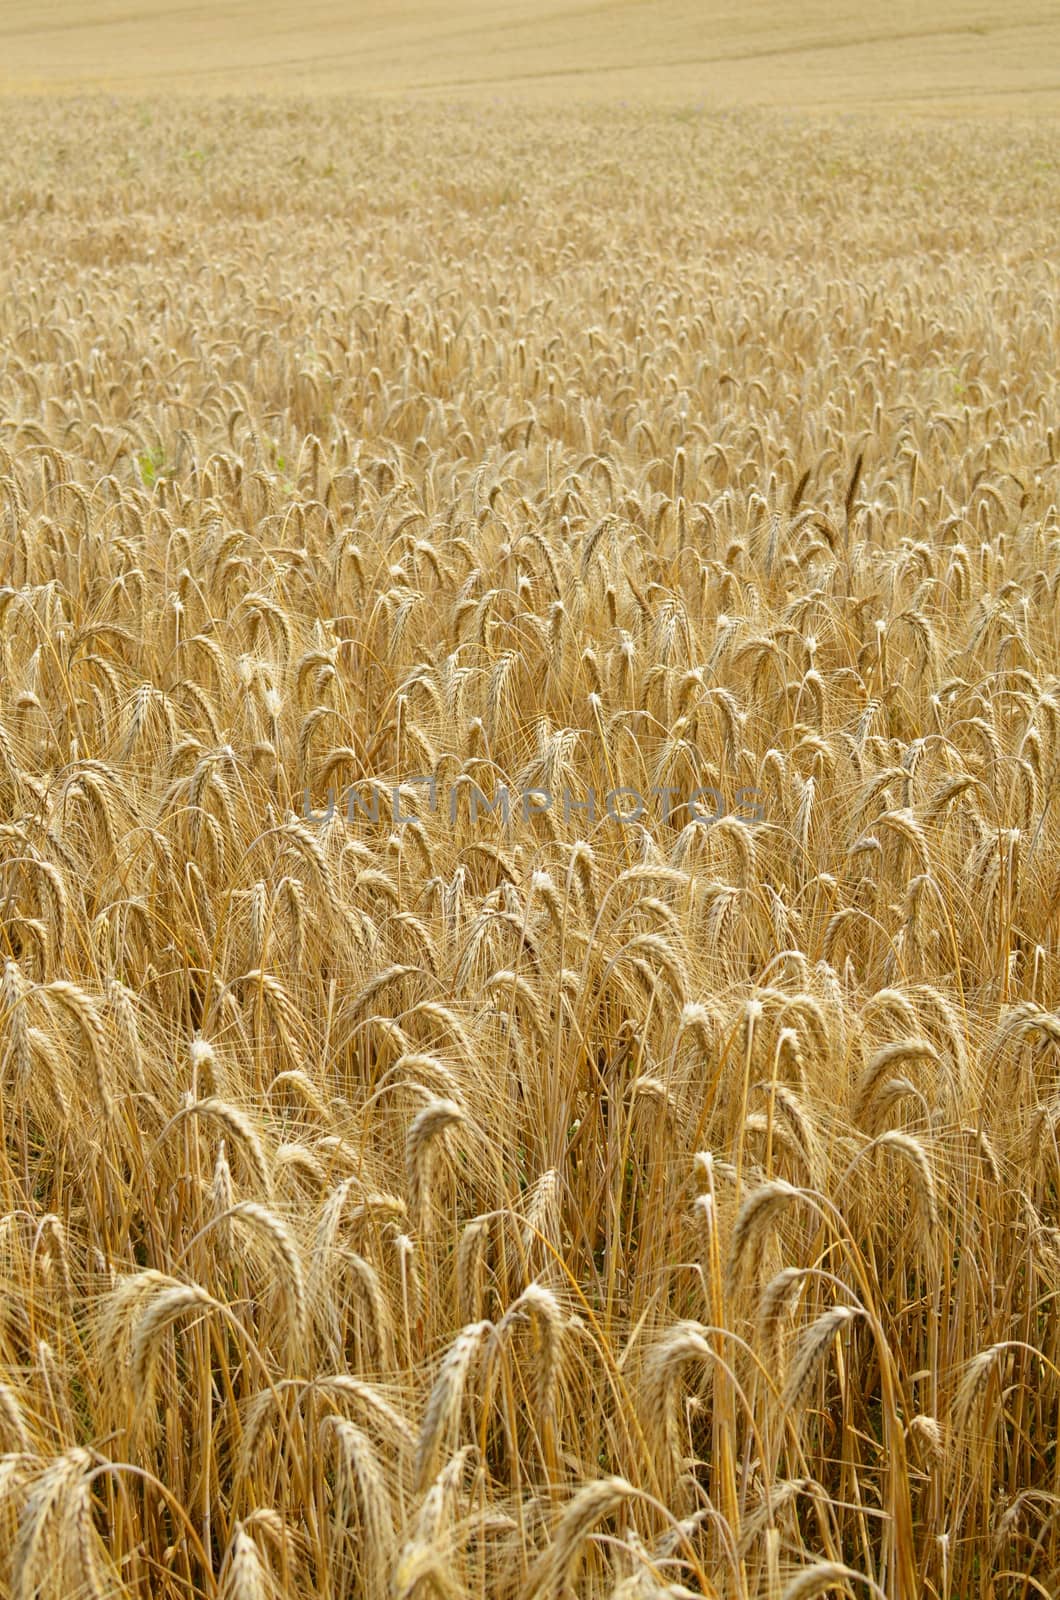 Golden Grain Field Background by fstockluk